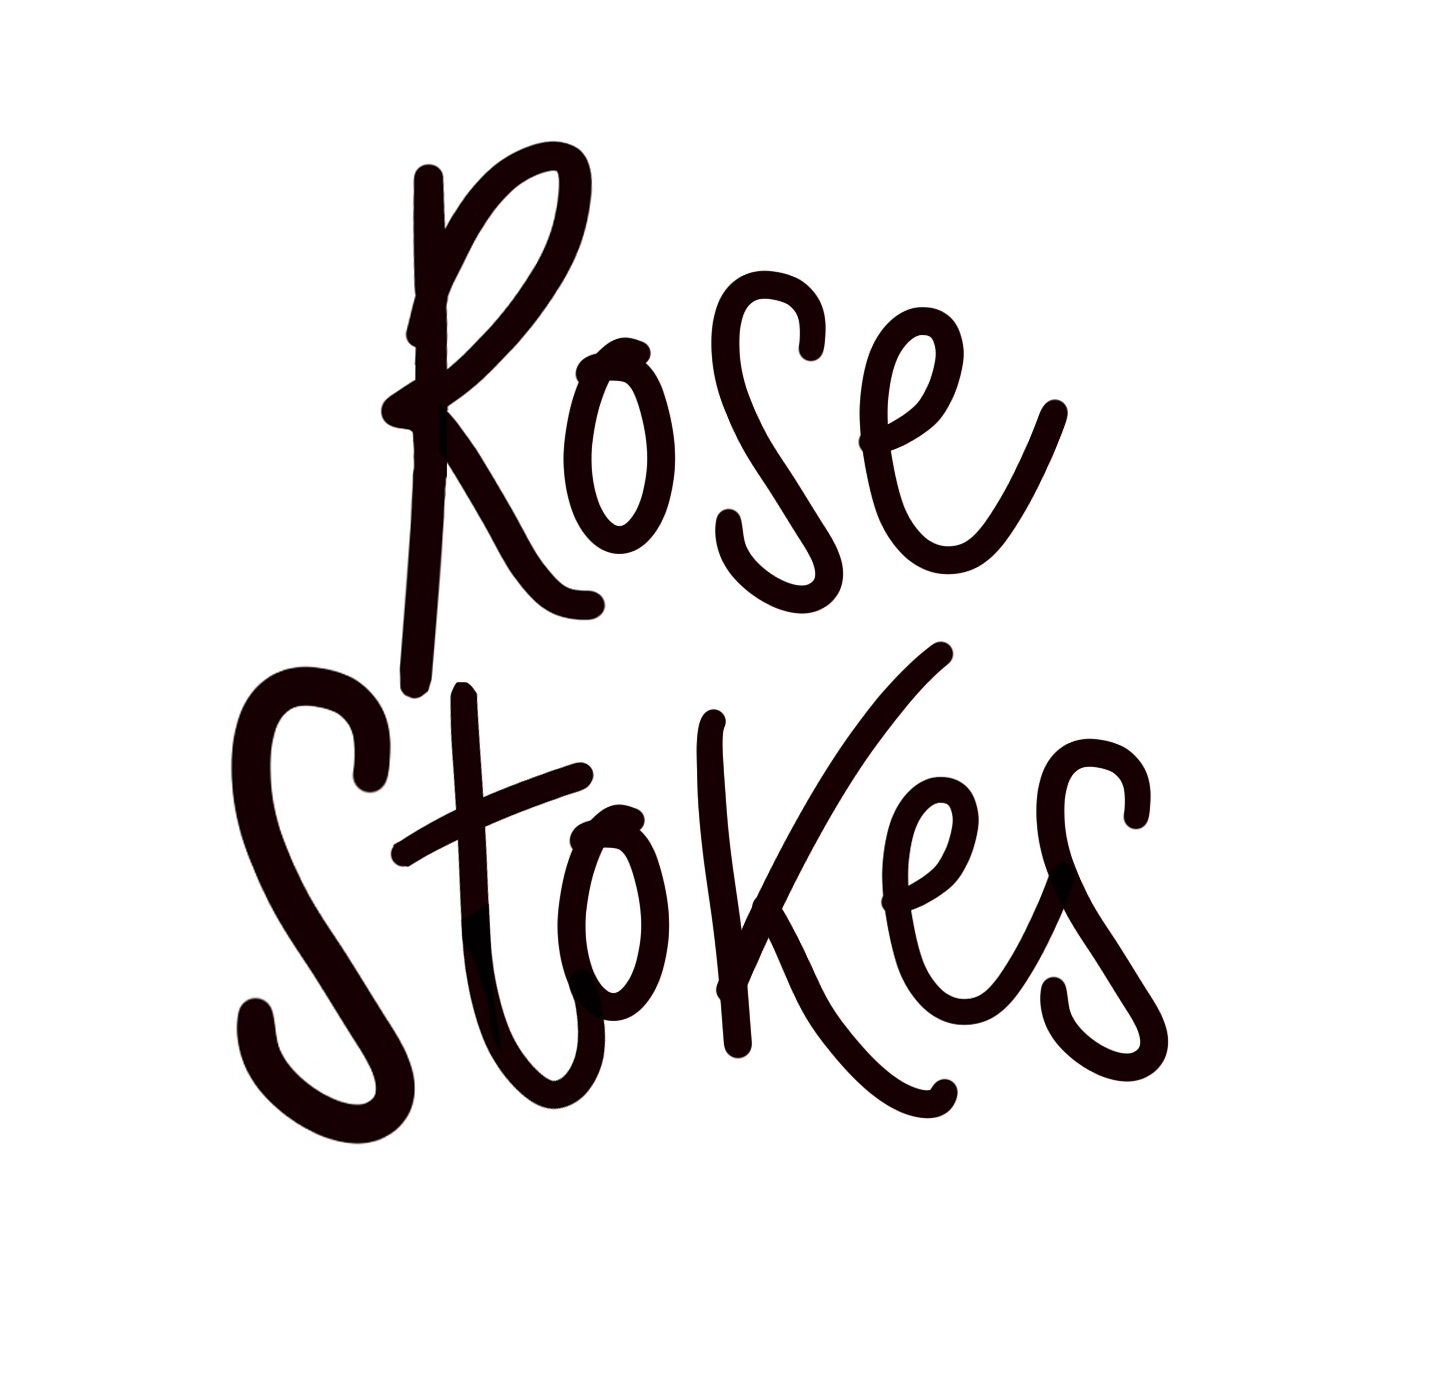 Rose Stokes